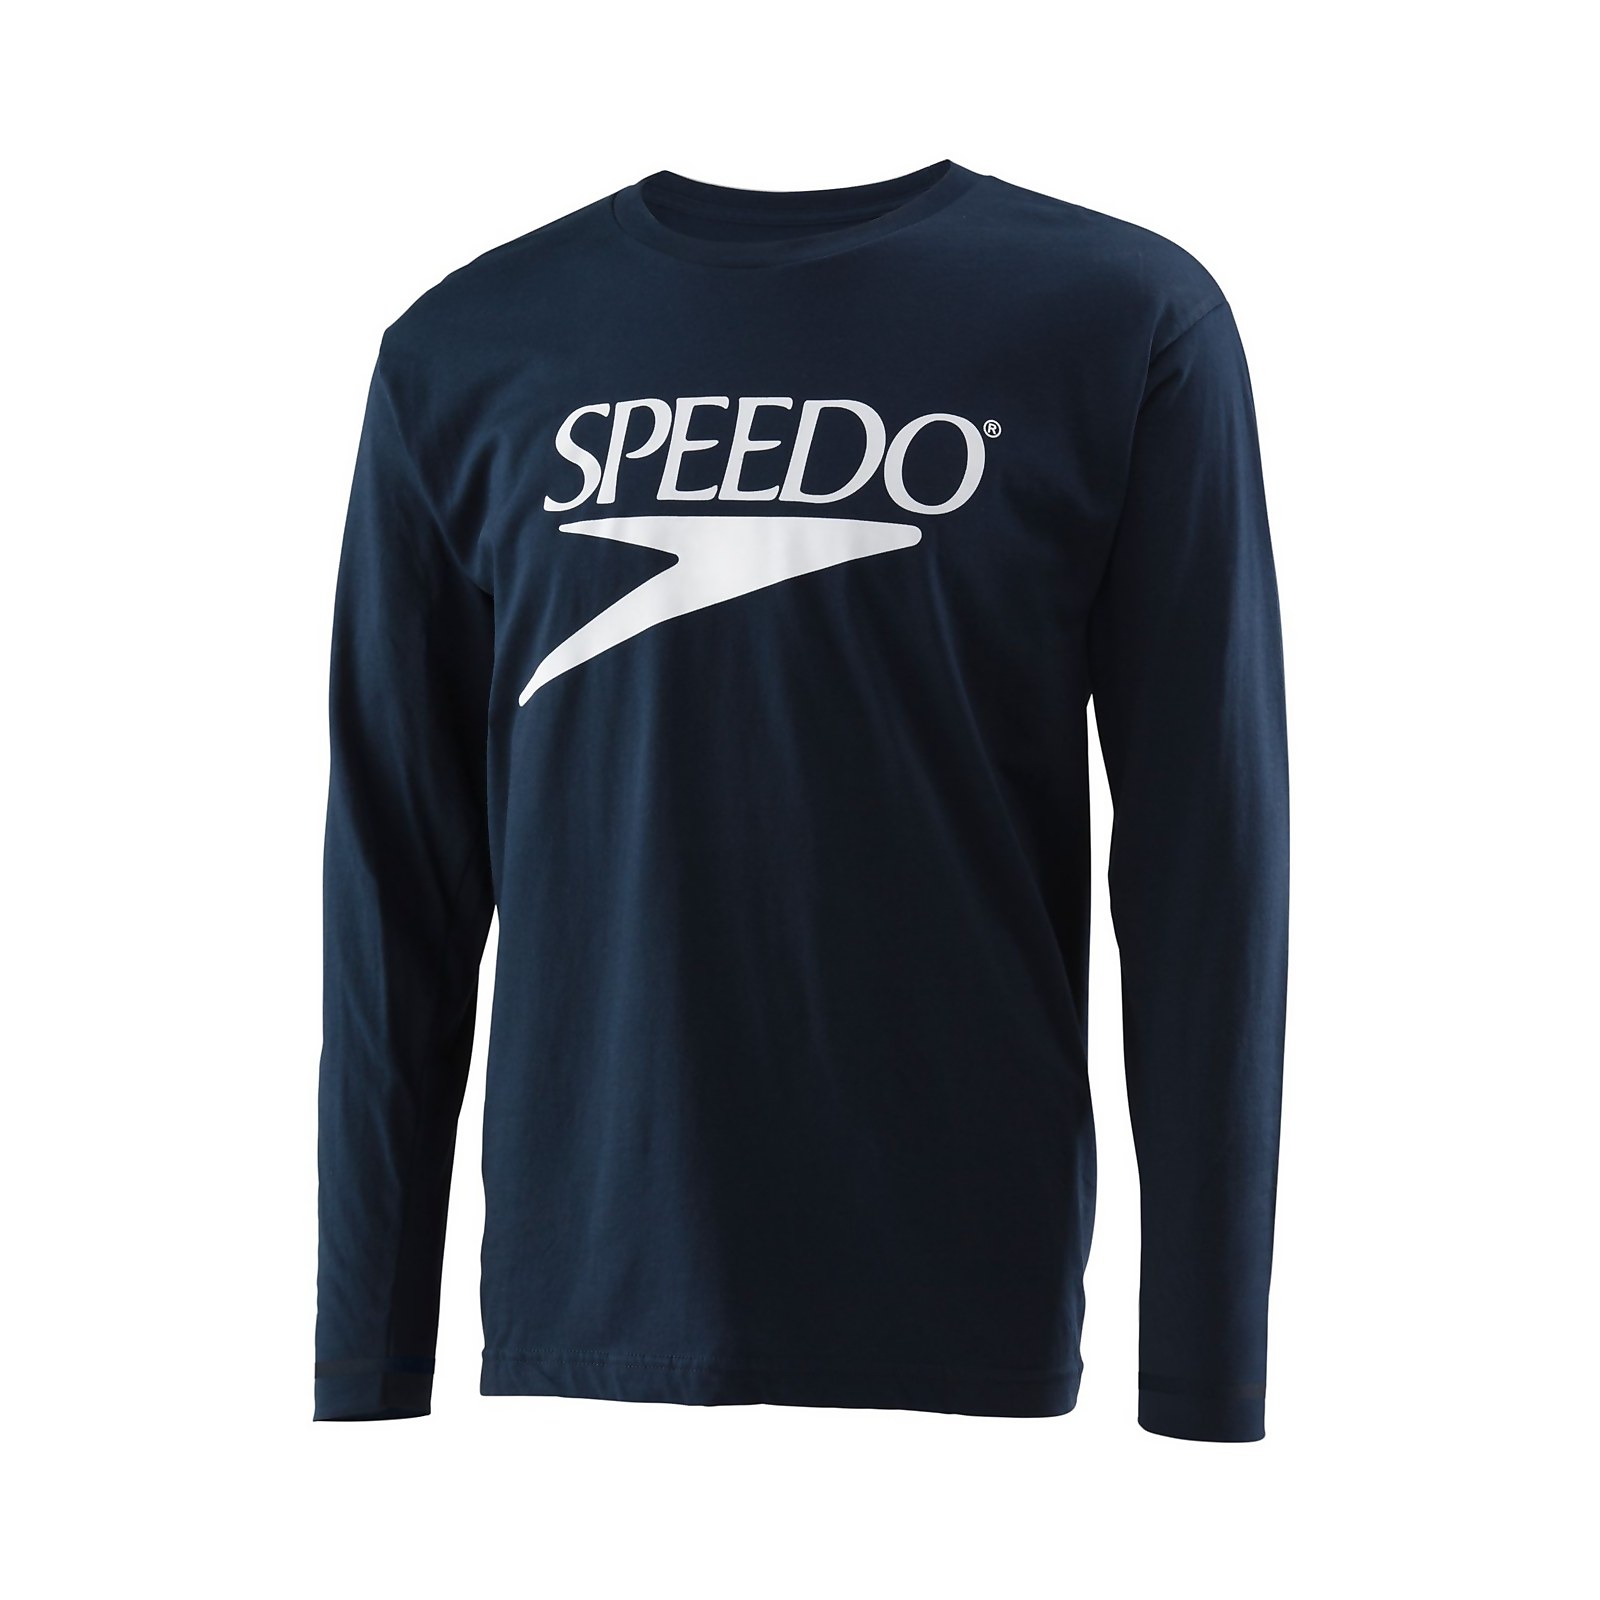 Speedo  Vintage Logo Long Sleeve Tee - S    : Navy